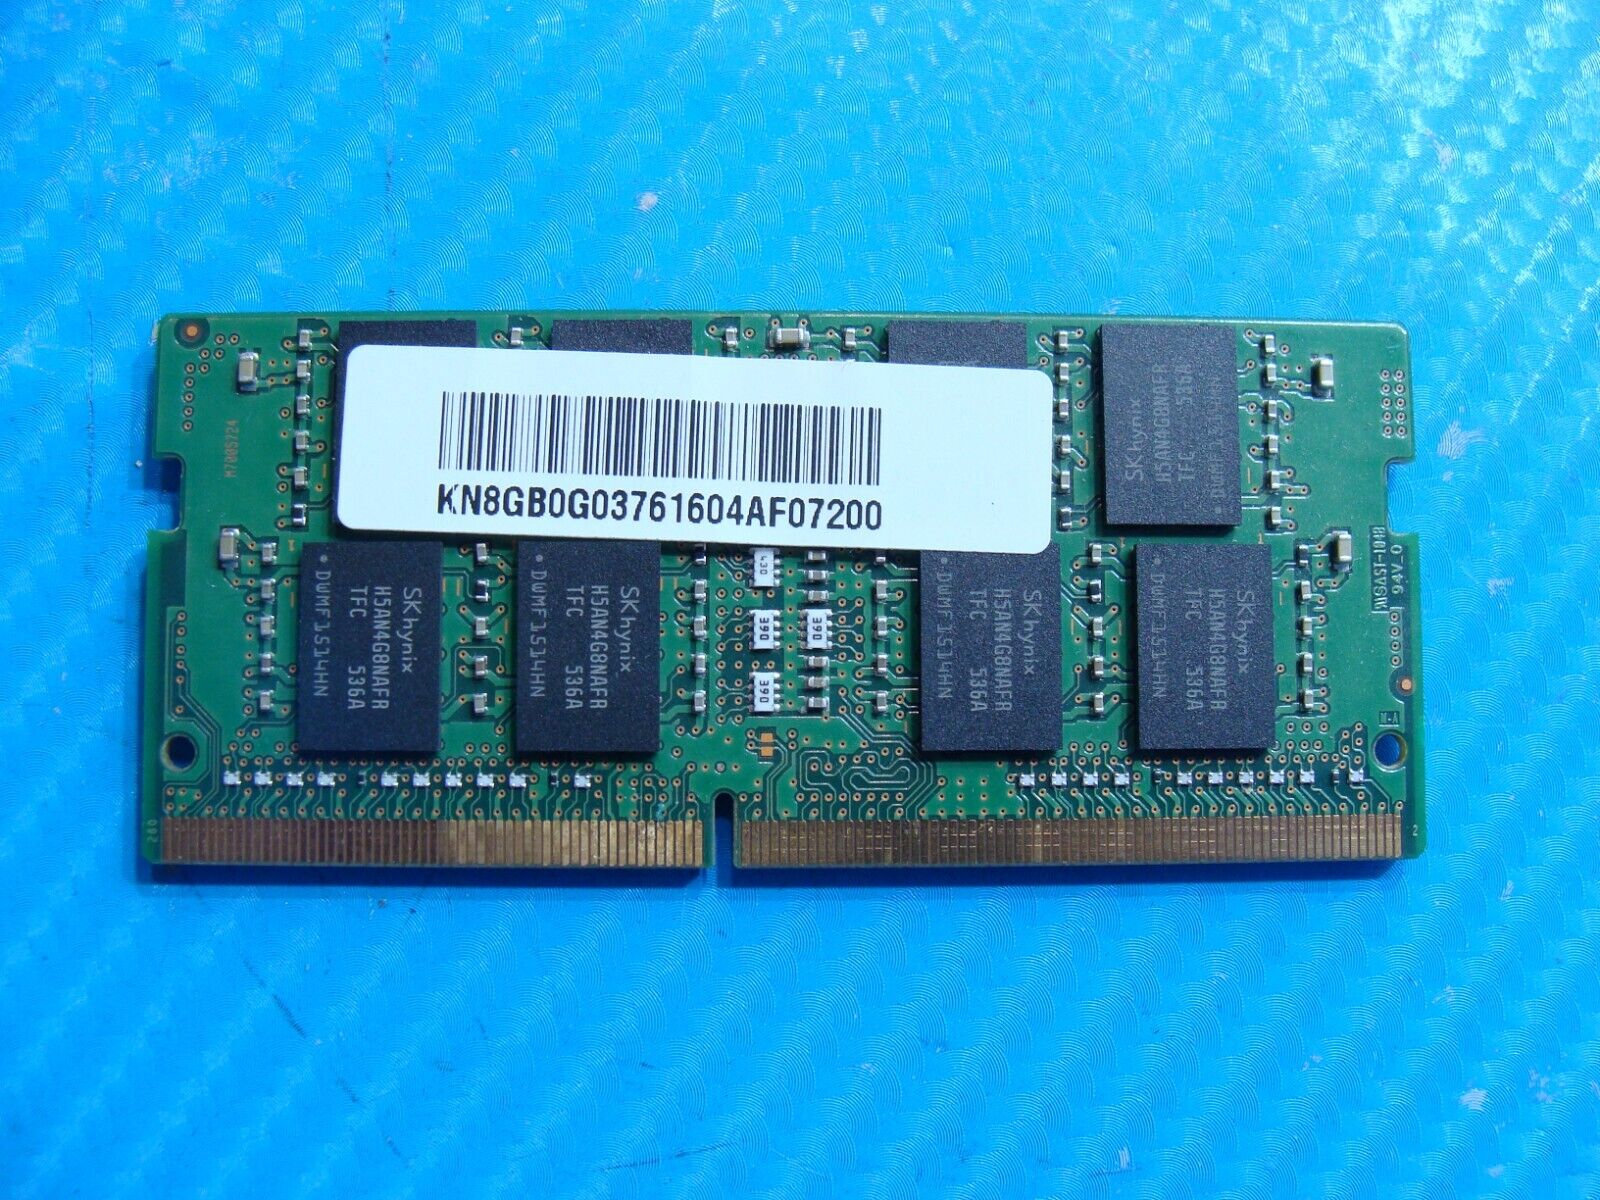 Acer R5-571TG SK Hynix 8Gb Memory Ram So-Dimm PC4-2133P HMA41GS6AFR8N-TF